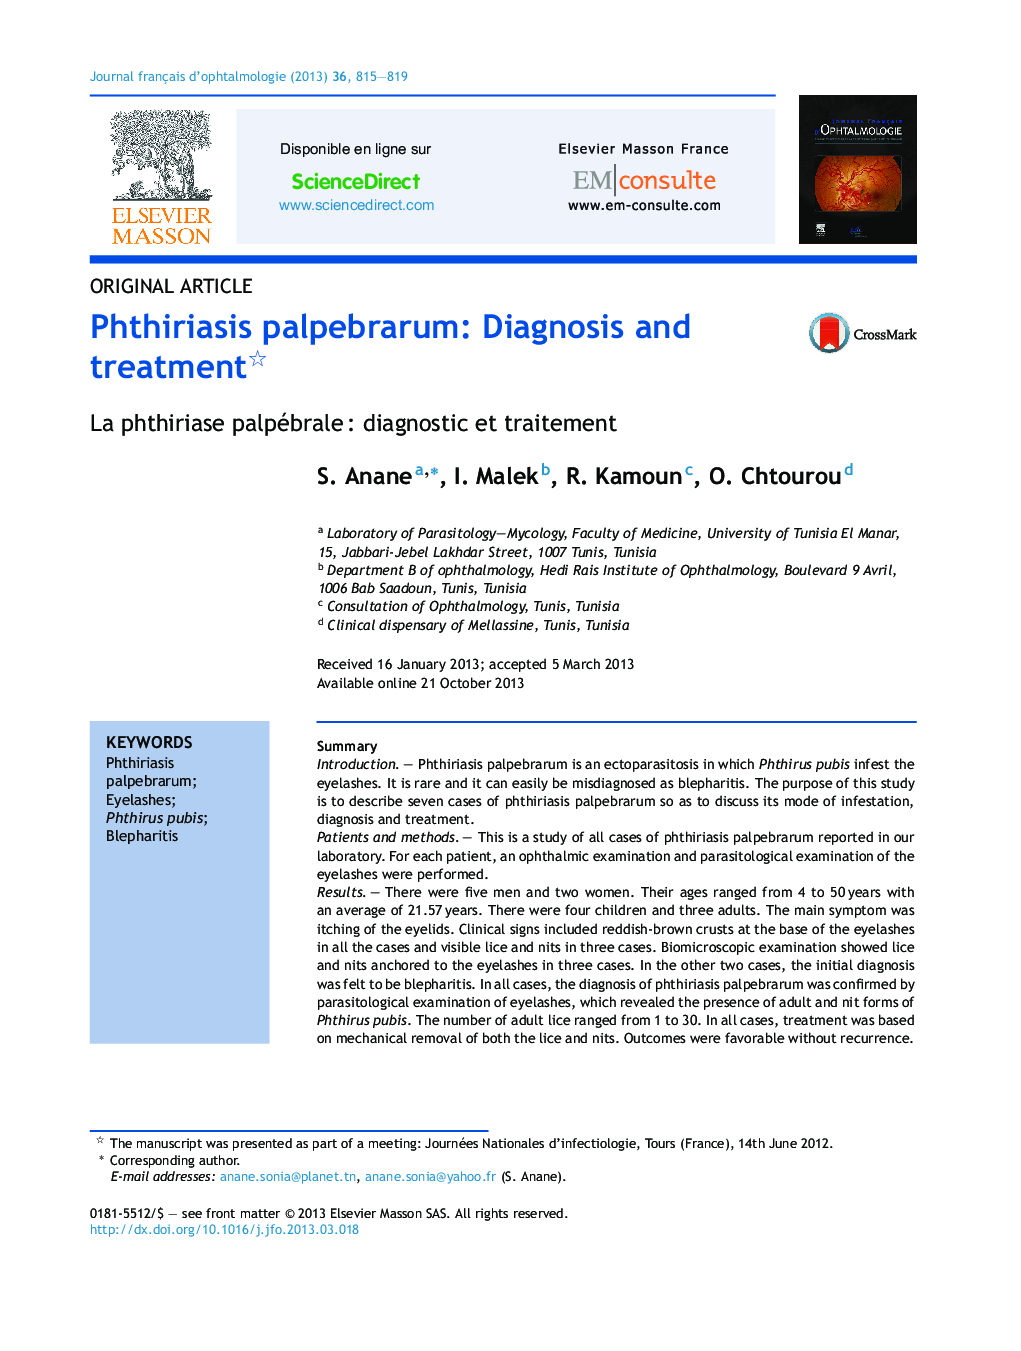 Phthiriasis palpebrarum: Diagnosis and treatment